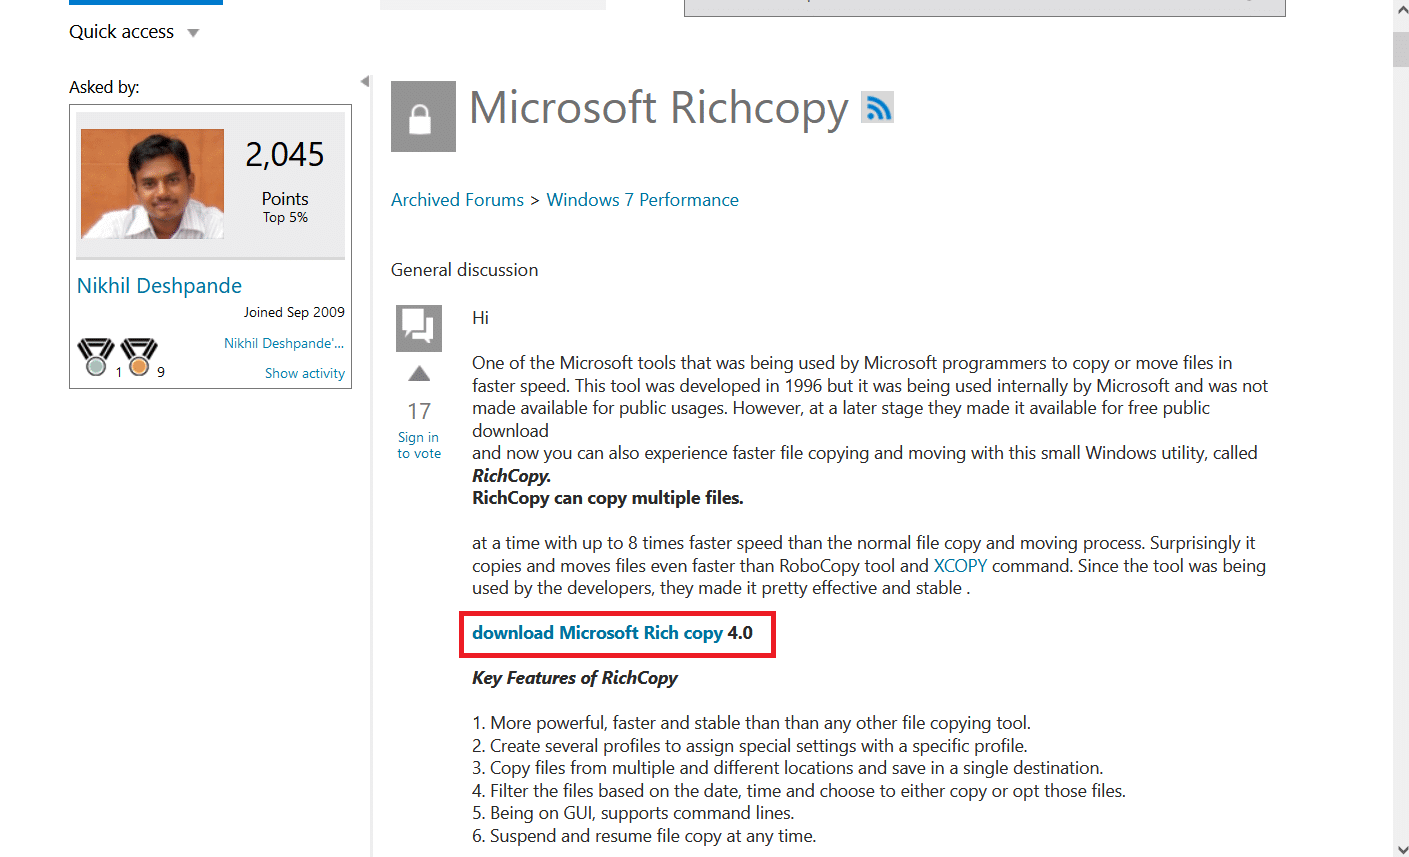 Microsoft RichCopy